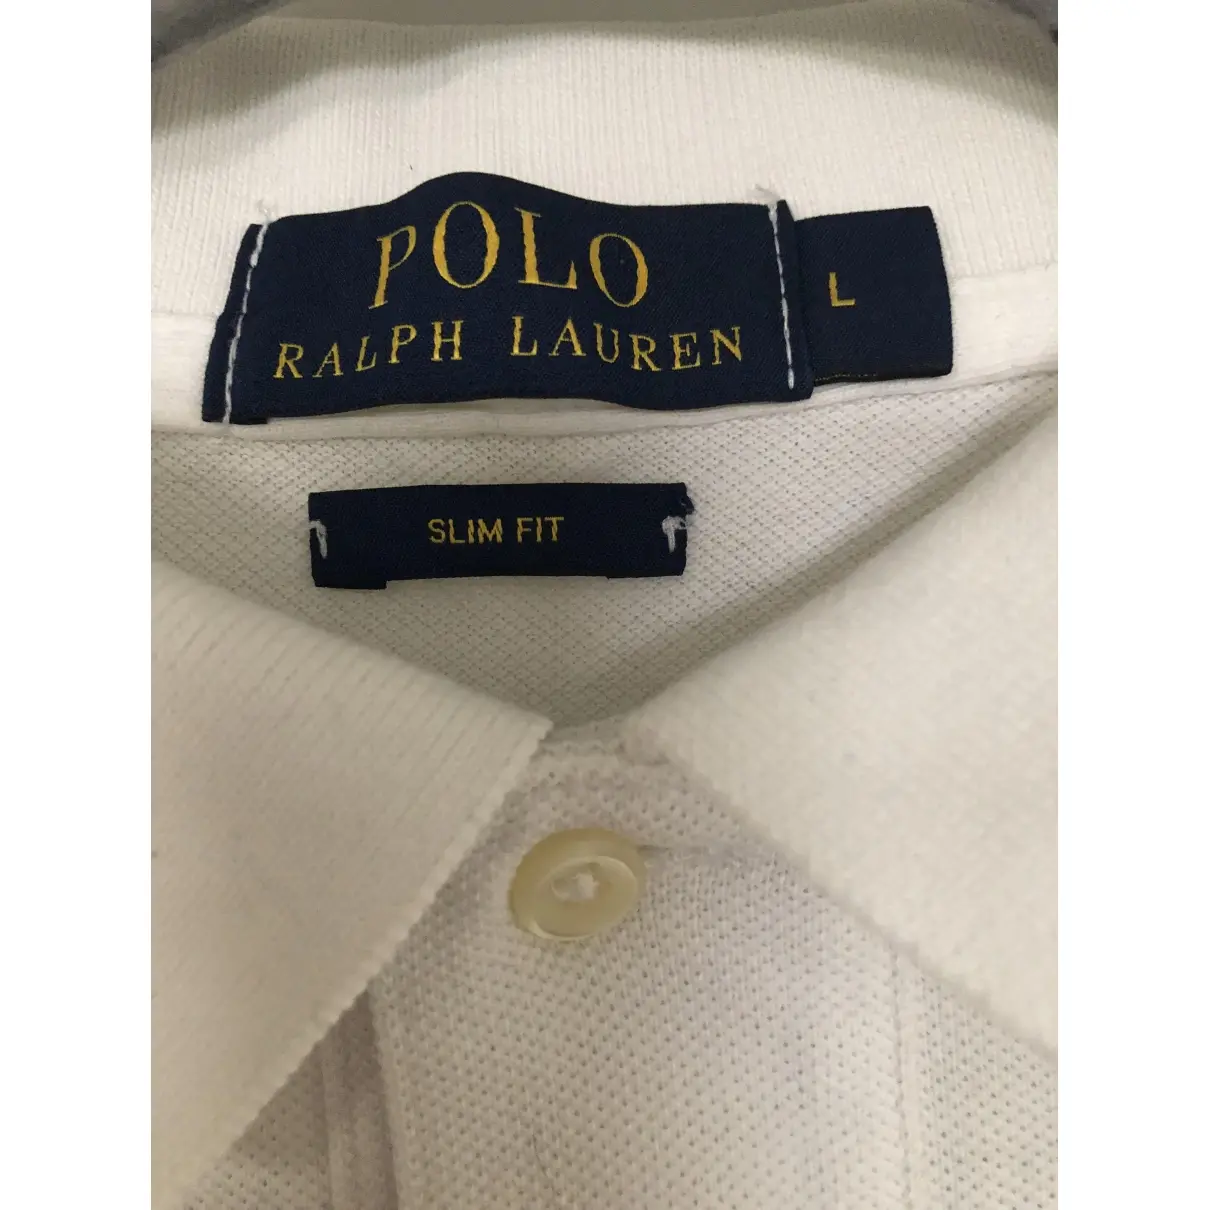 Buy Polo Ralph Lauren Polo shirt online